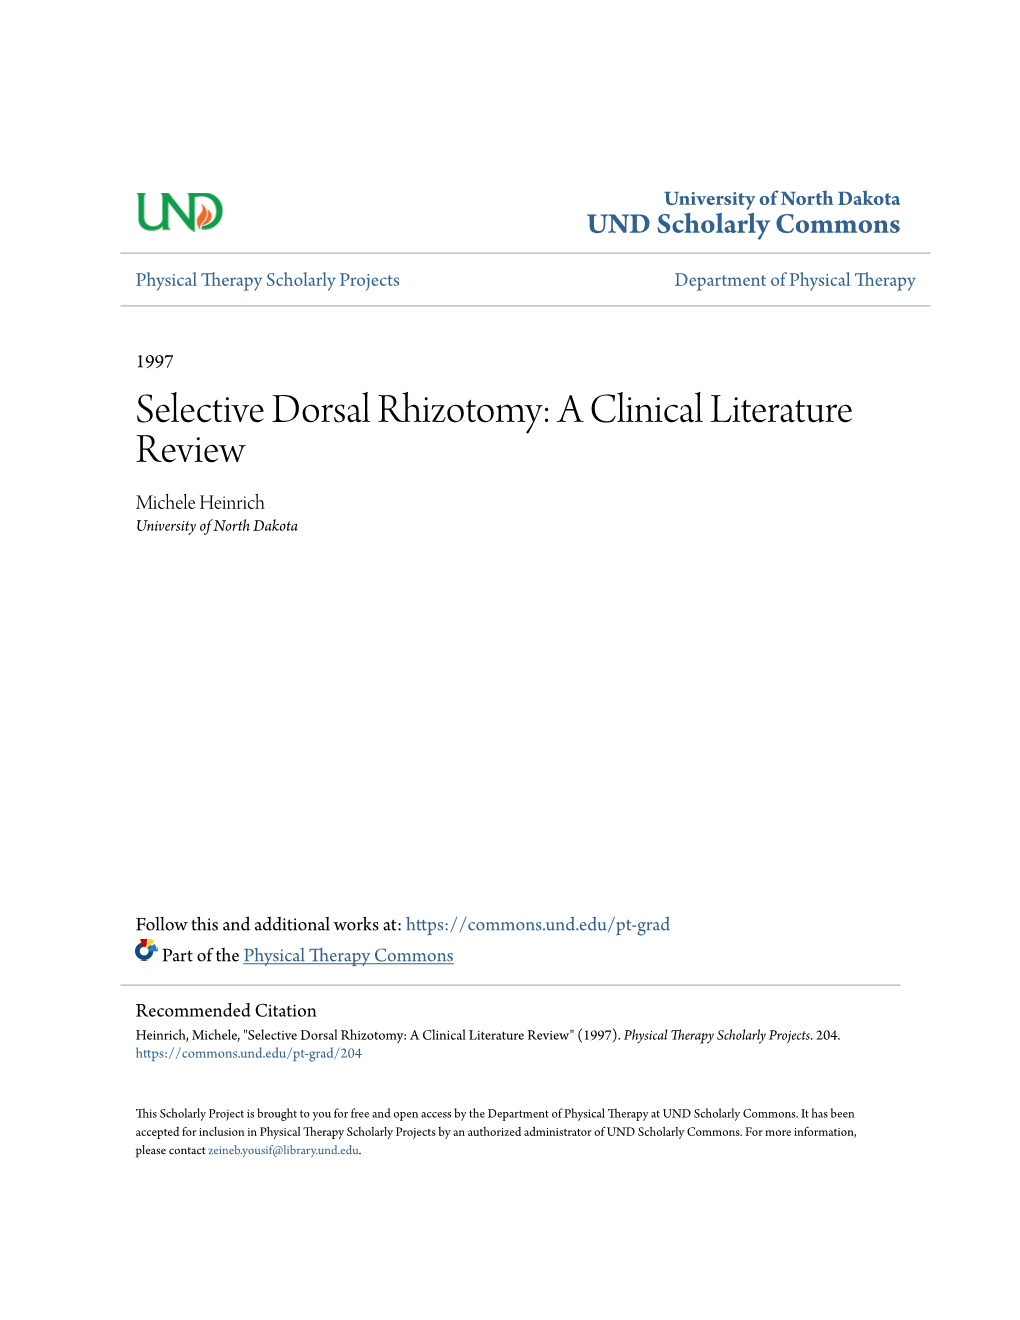 Selective Dorsal Rhizotomy: a Clinical Literature Review Michele Heinrich University of North Dakota